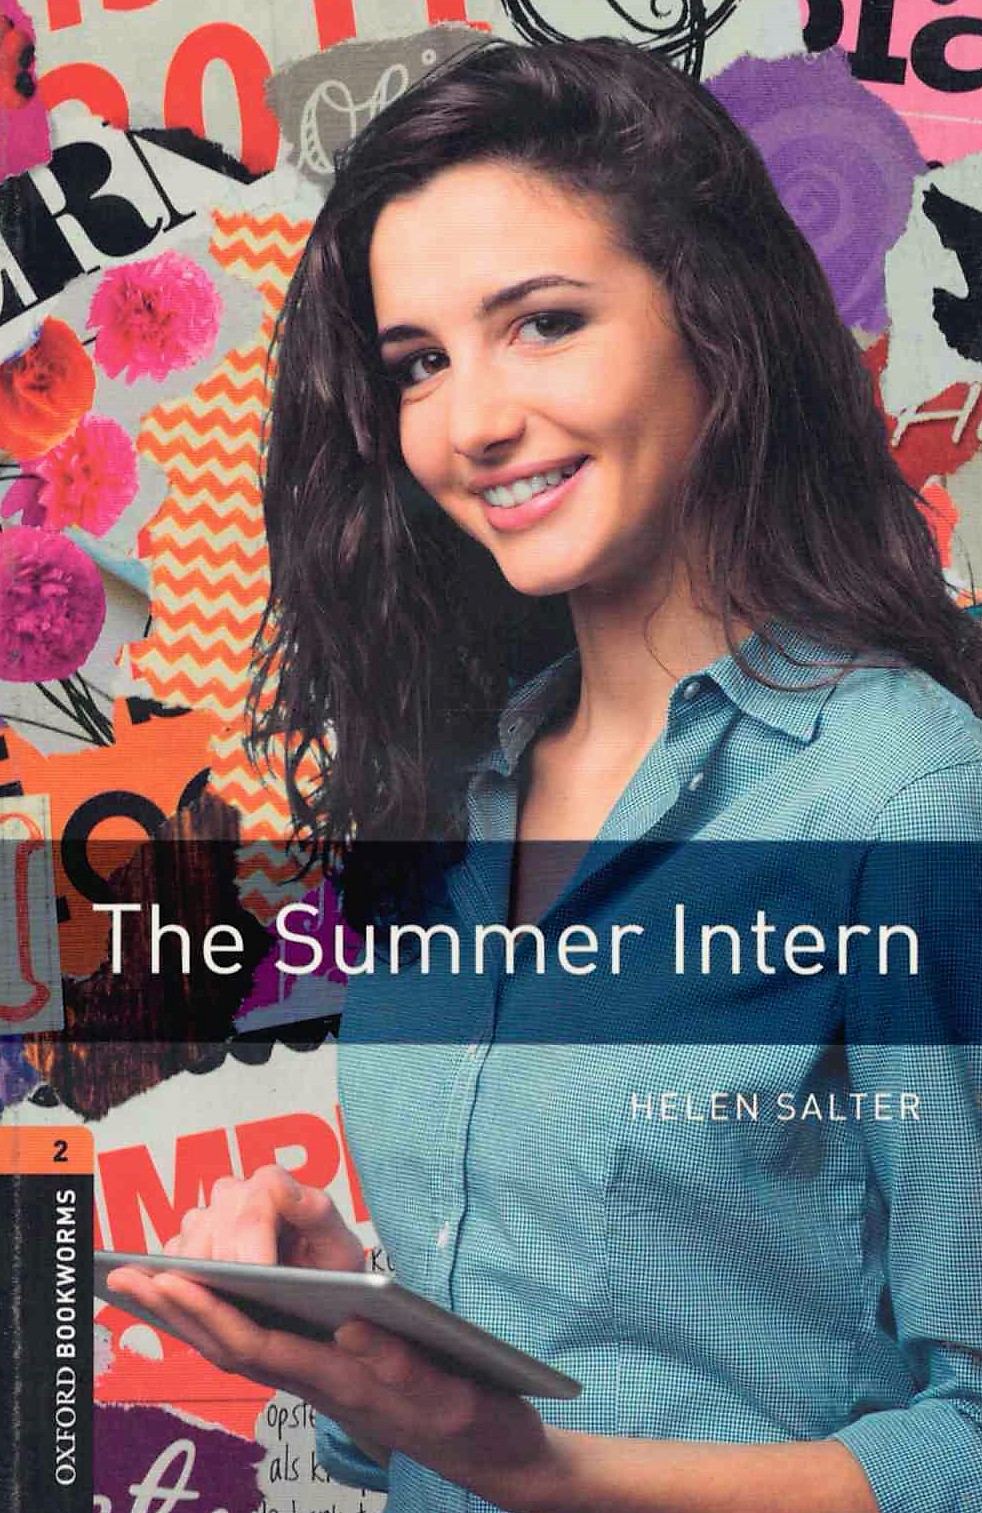 The Summer Intern